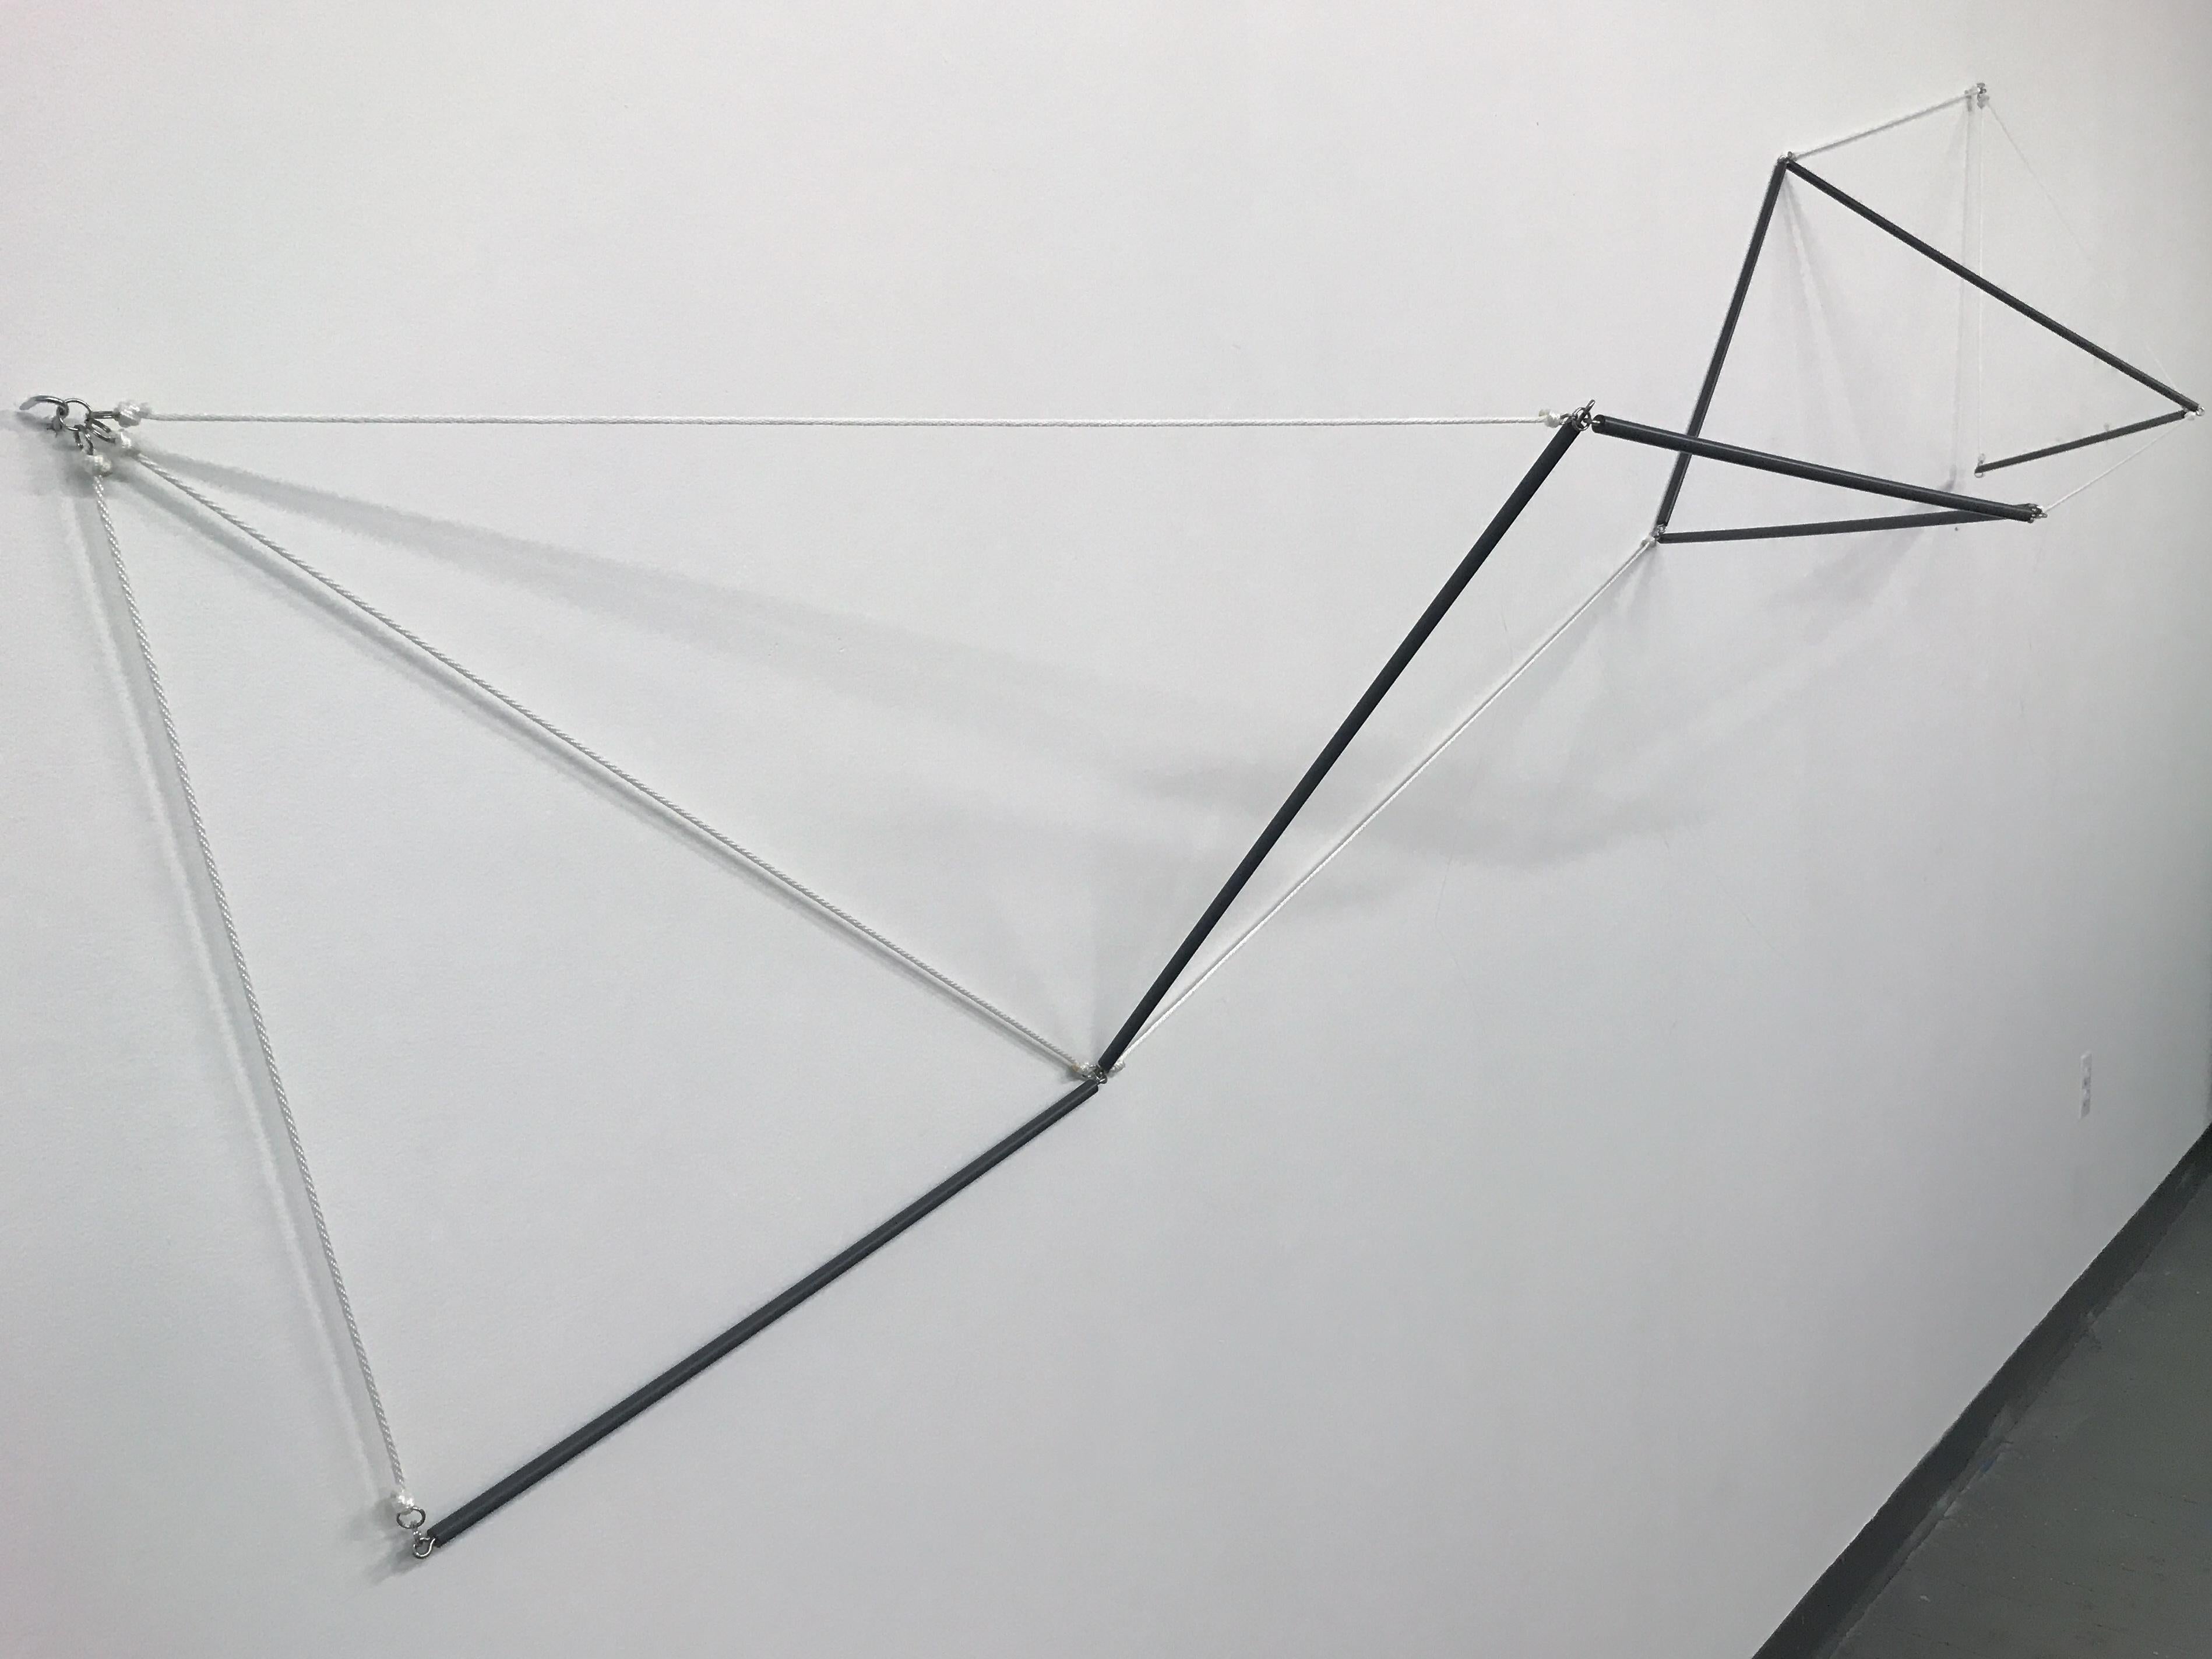 Flipside, 2018, Polyesterschnur, PVCstange, Edelstahlstahl, 96 x 42,5 x 17,5 Zoll – Sculpture von Daniel G. Hill